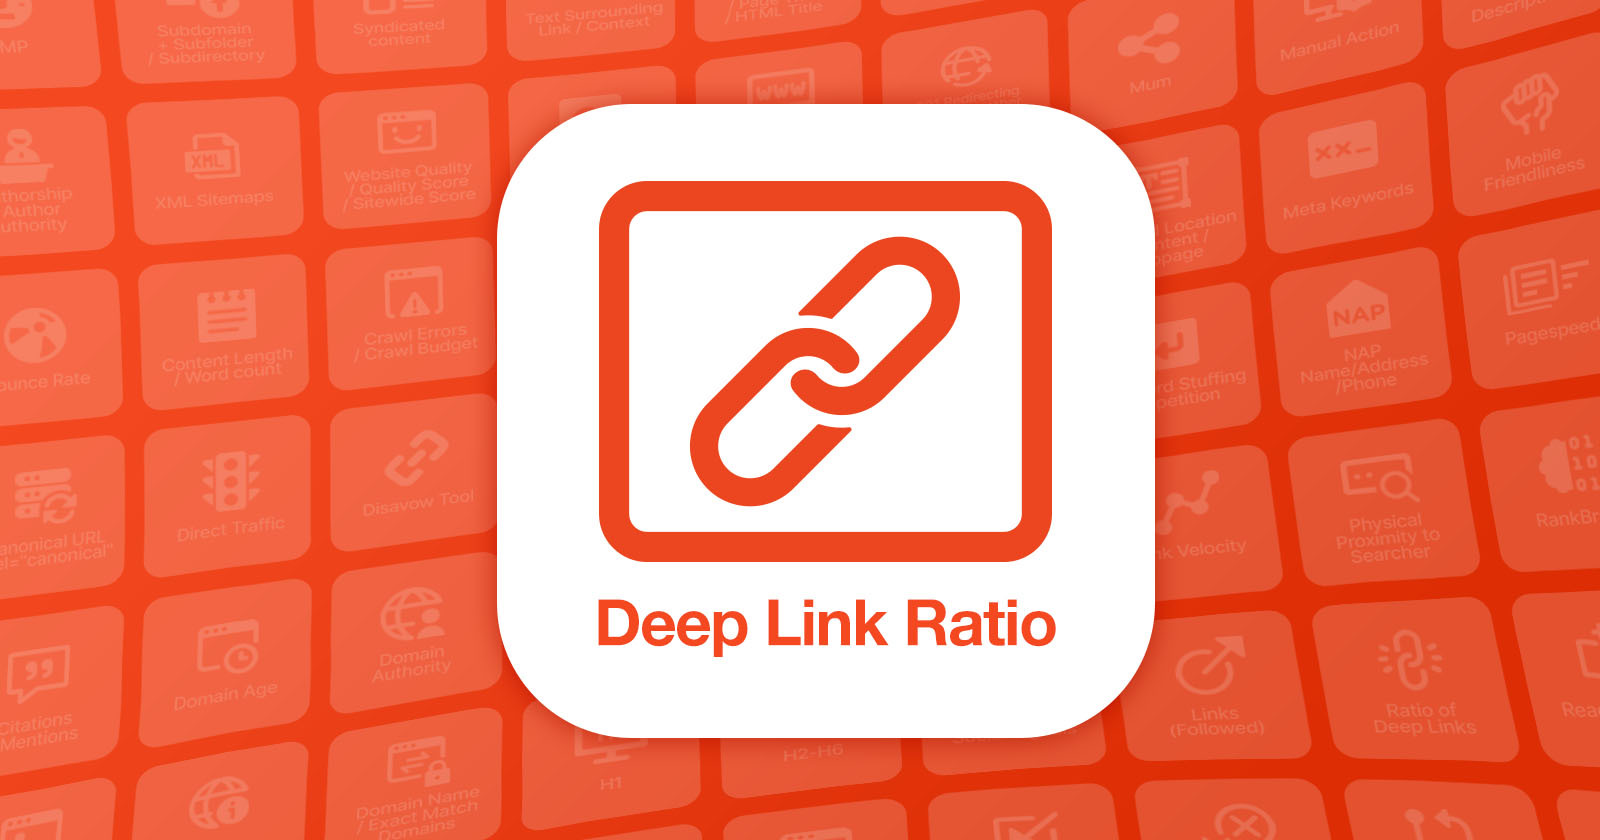 Deep Link Ratio